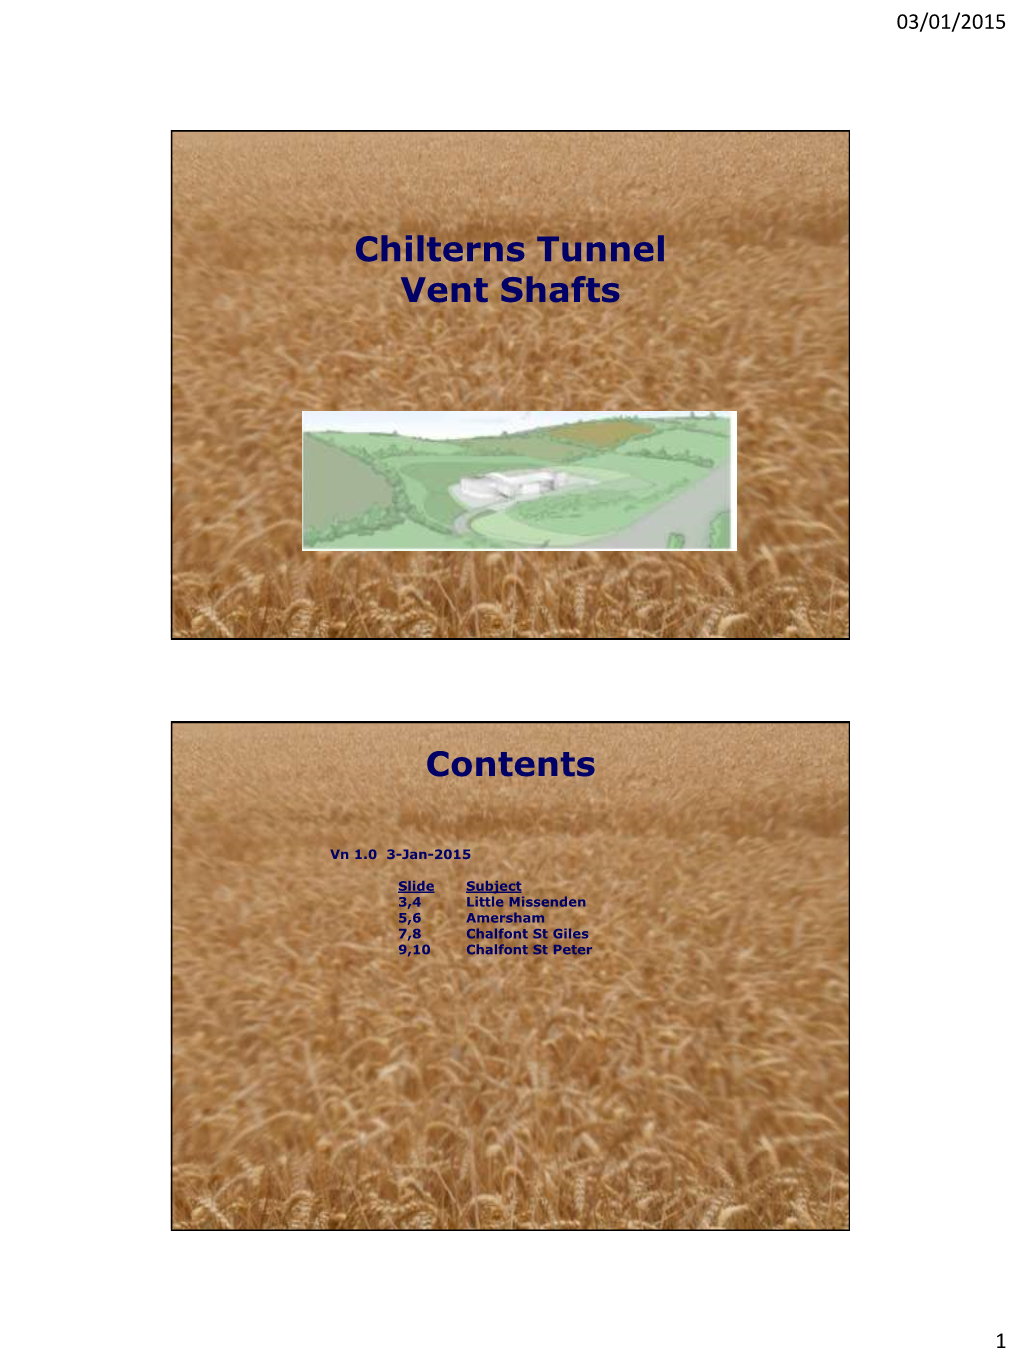 Chilterns Tunnel Vent Shafts